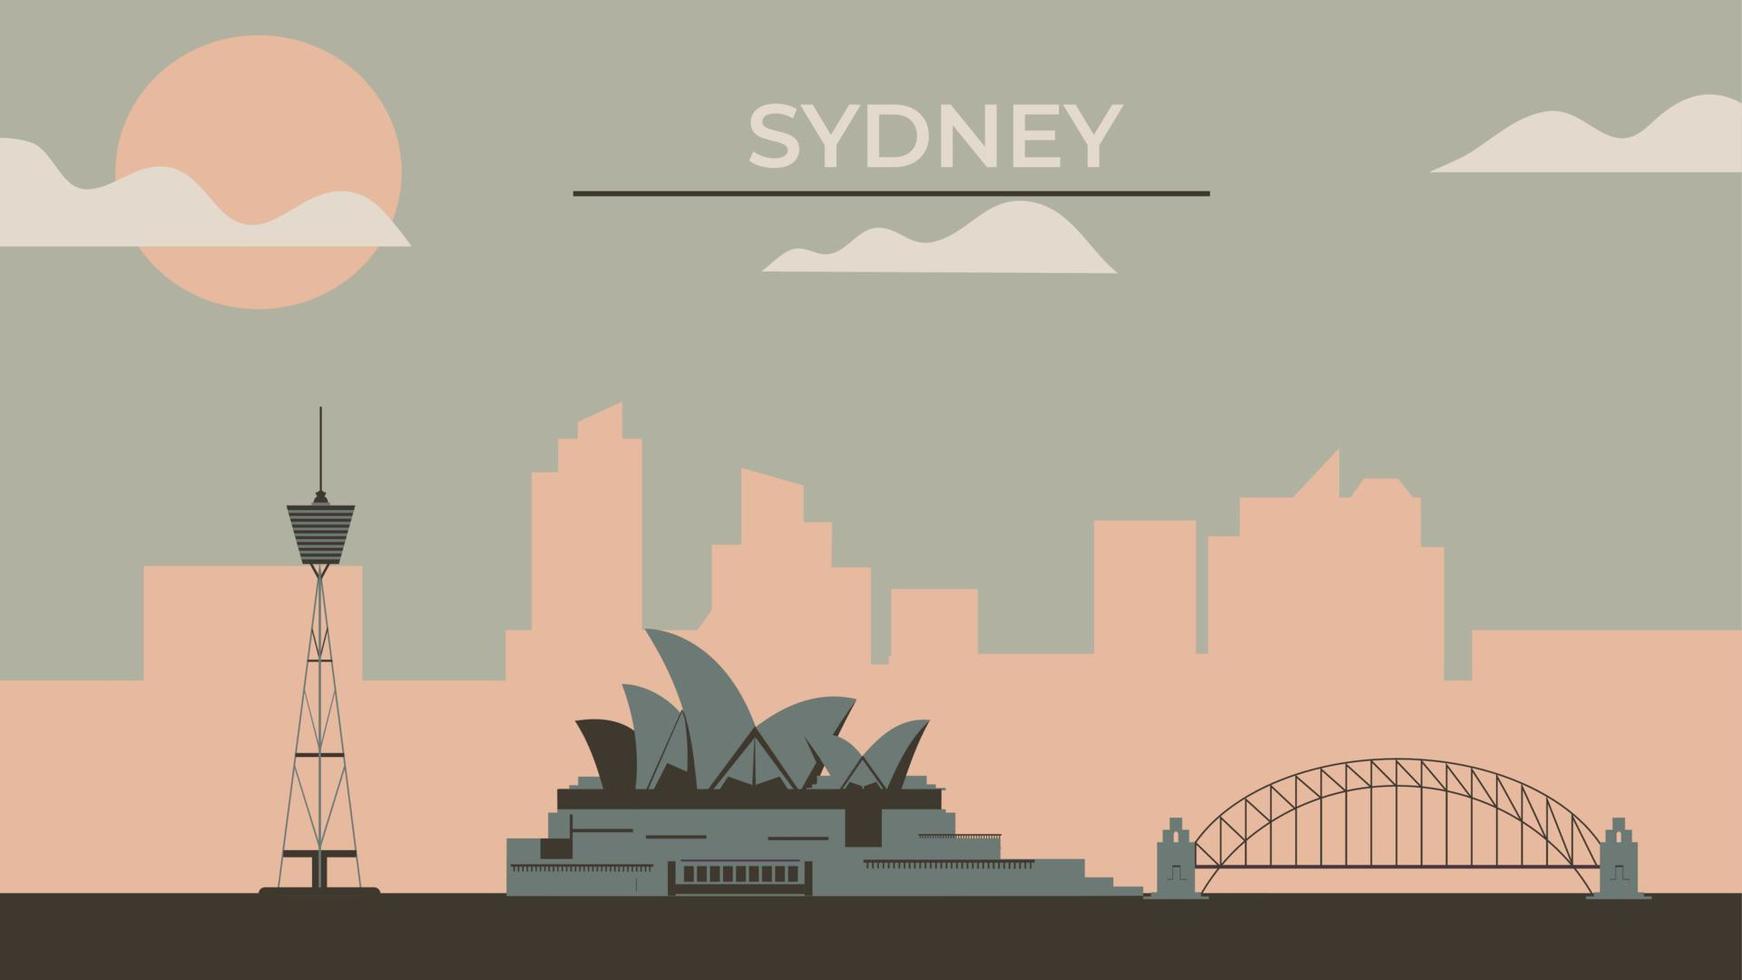 Sydney city illustration for postcard vector